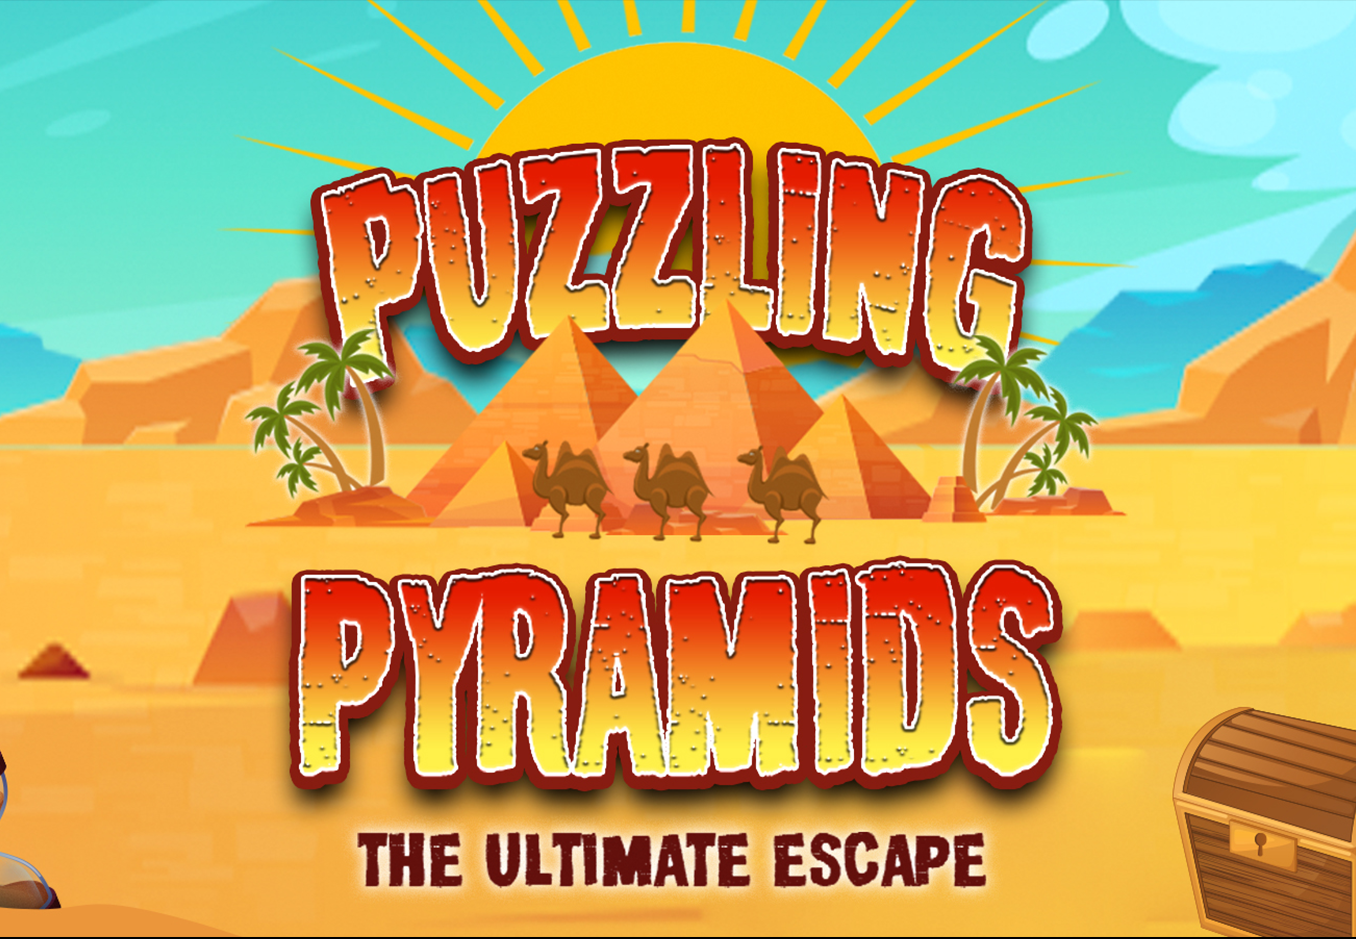 Puzzling Pyramids VBS Curriculum